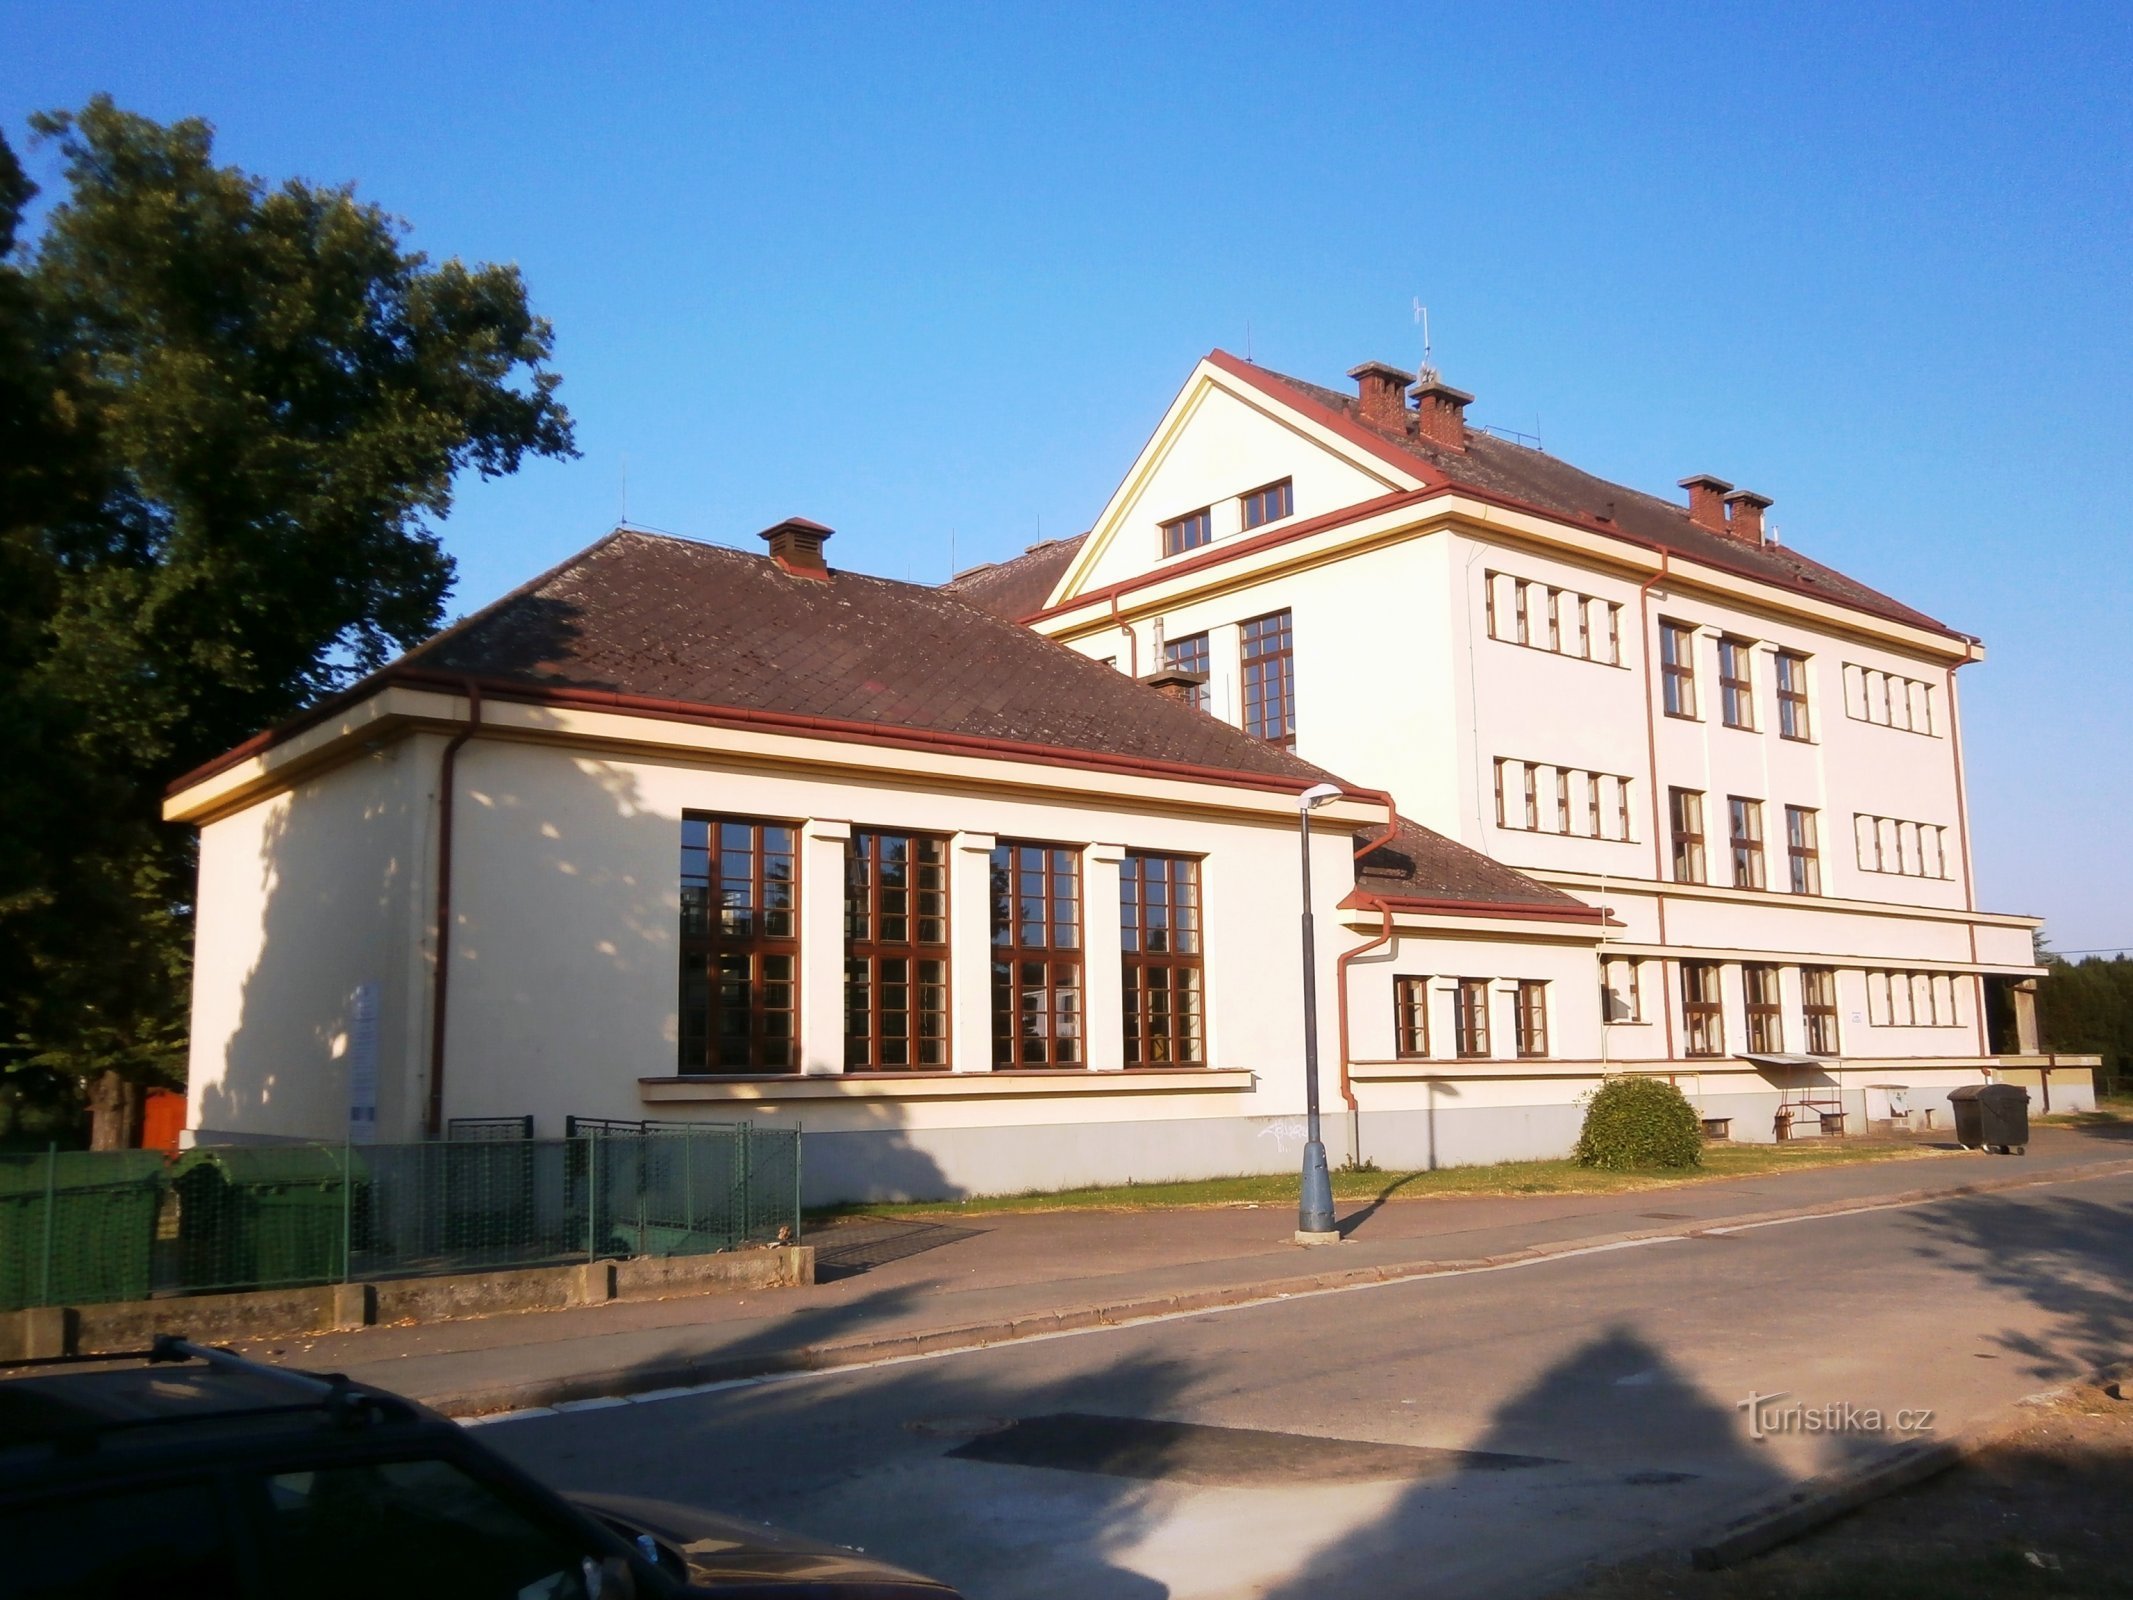 Masaryk Primary School i Plotiště nad Labem (Hradec Králové, 28.7.2013/XNUMX/XNUMX)